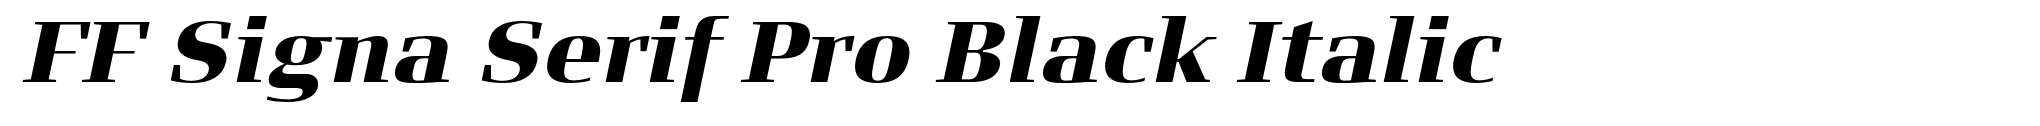 FF Signa Serif Pro Black Italic image